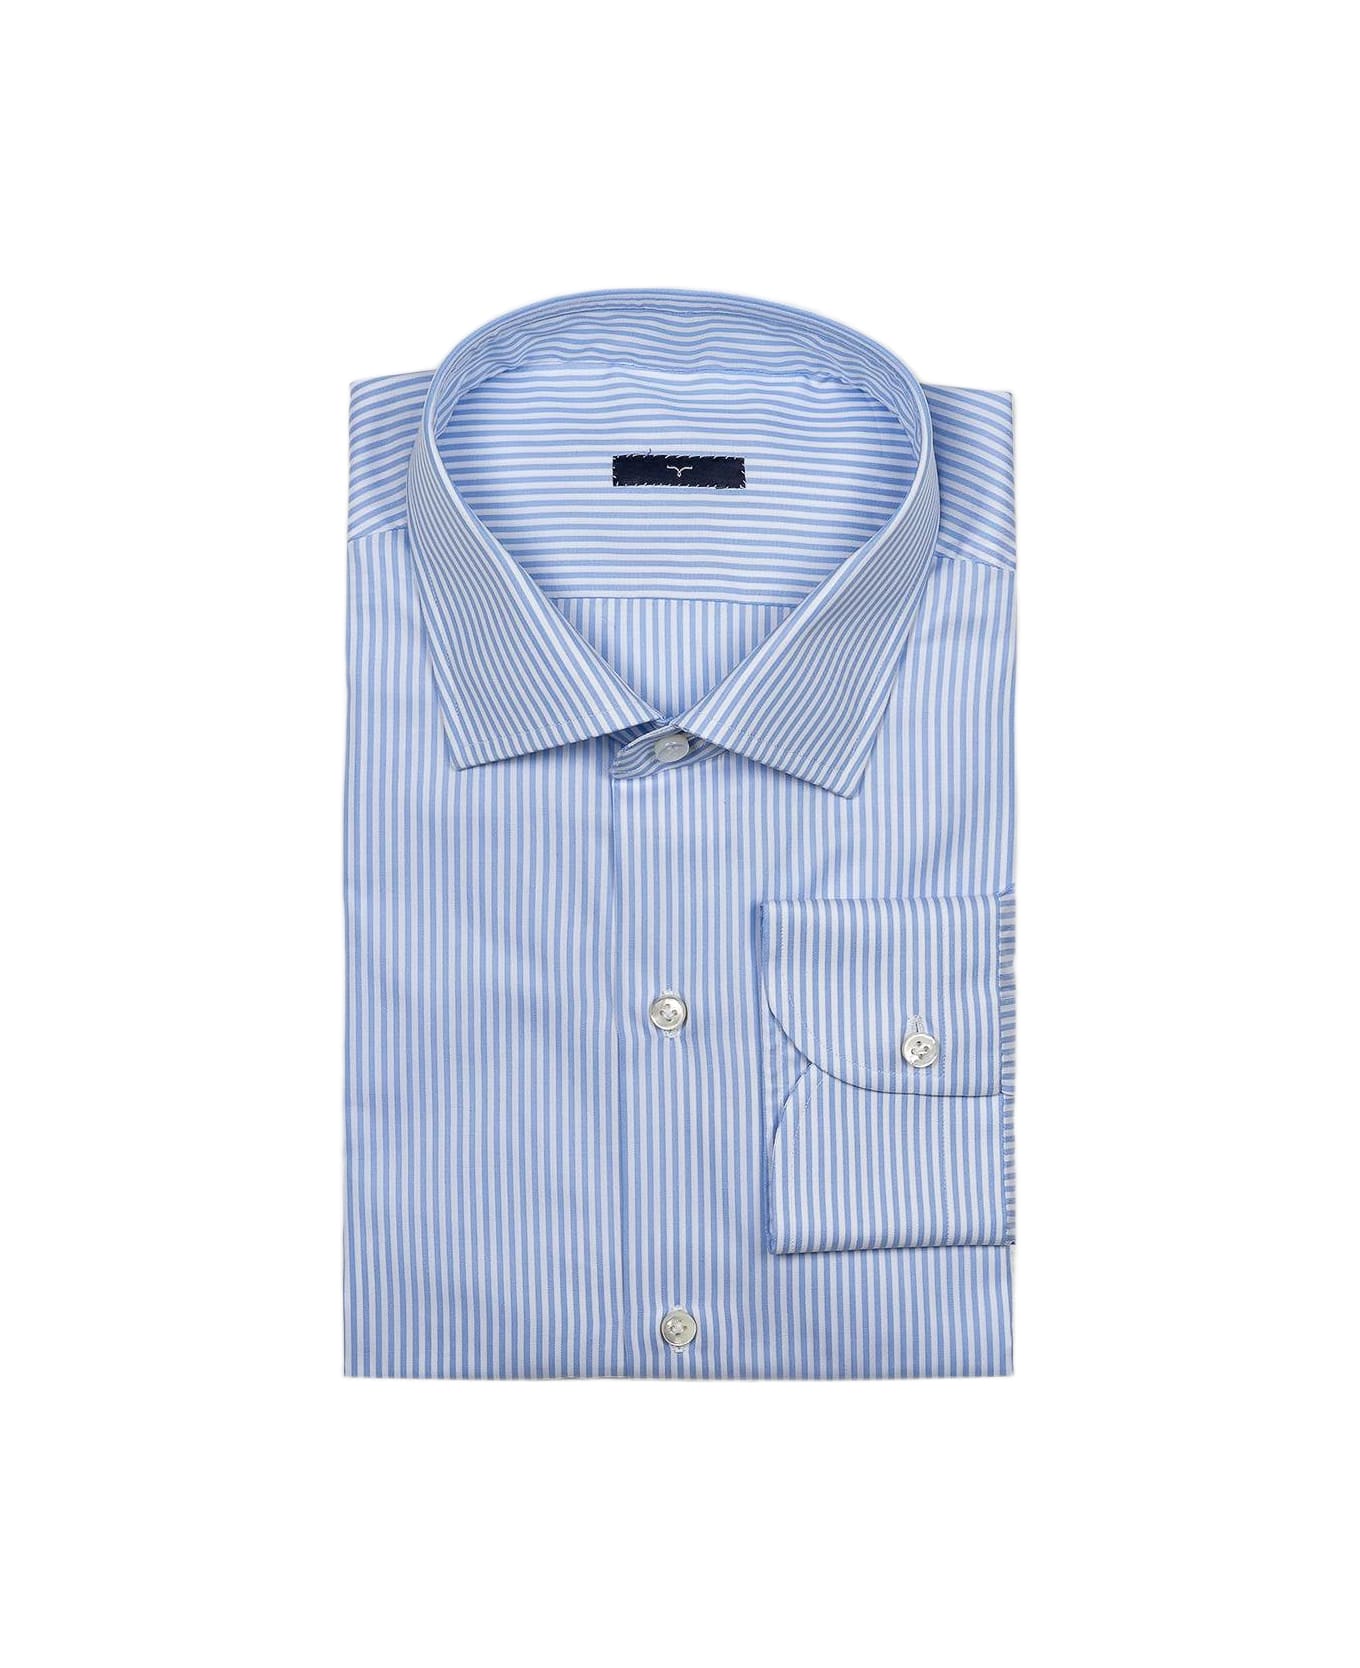 Larusmiani Handmade Shirt 'mayfair Executive' Shirt - LightBlue シャツ